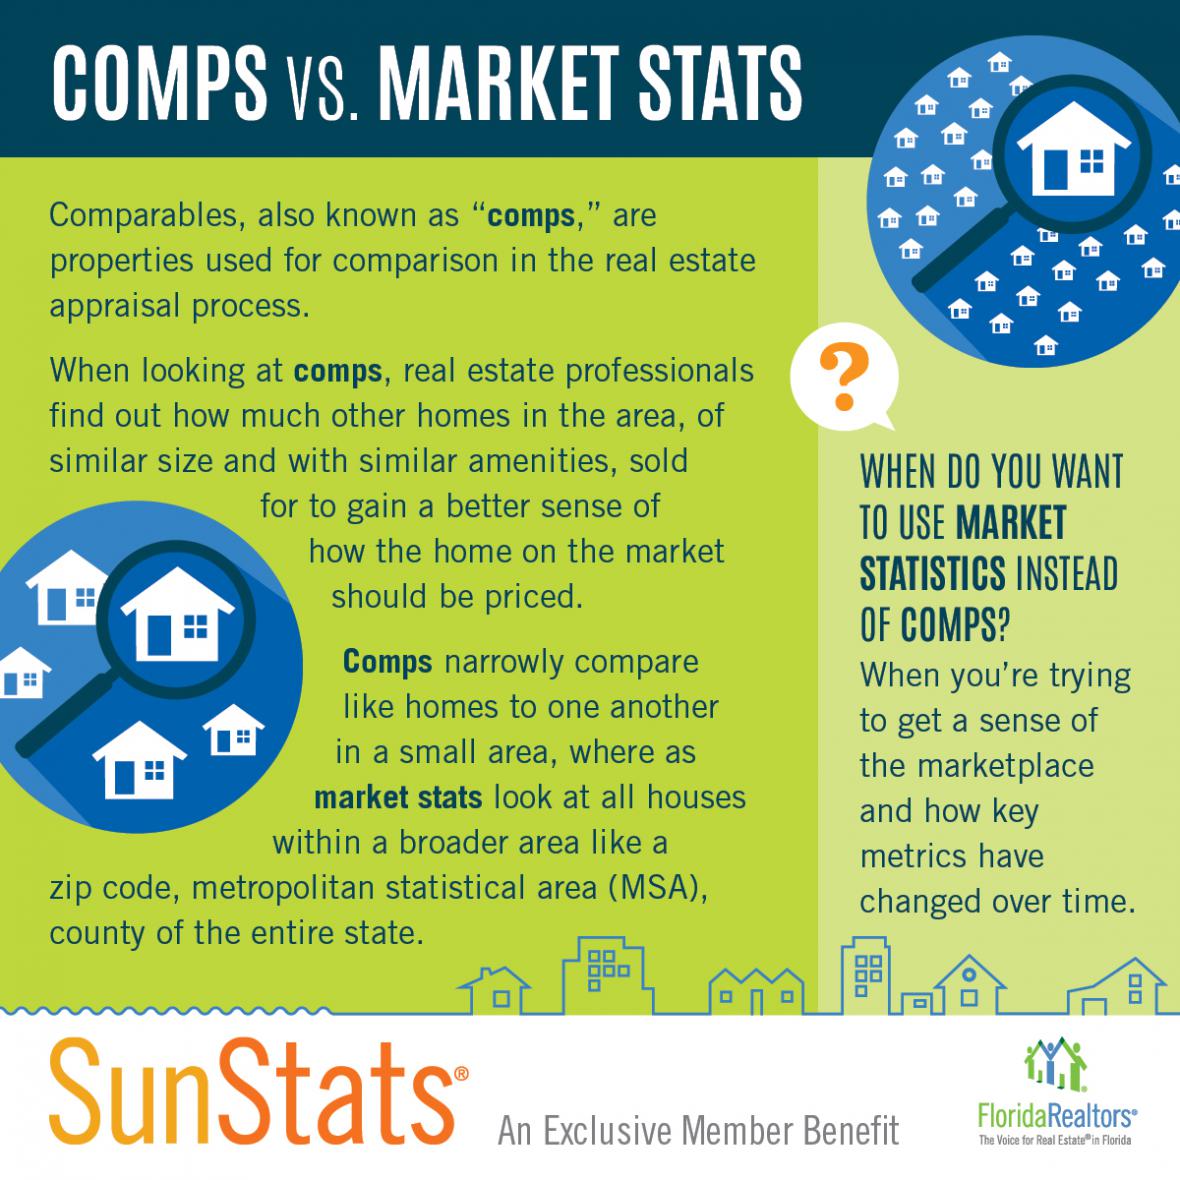 Comps vs. Market Stats infographic